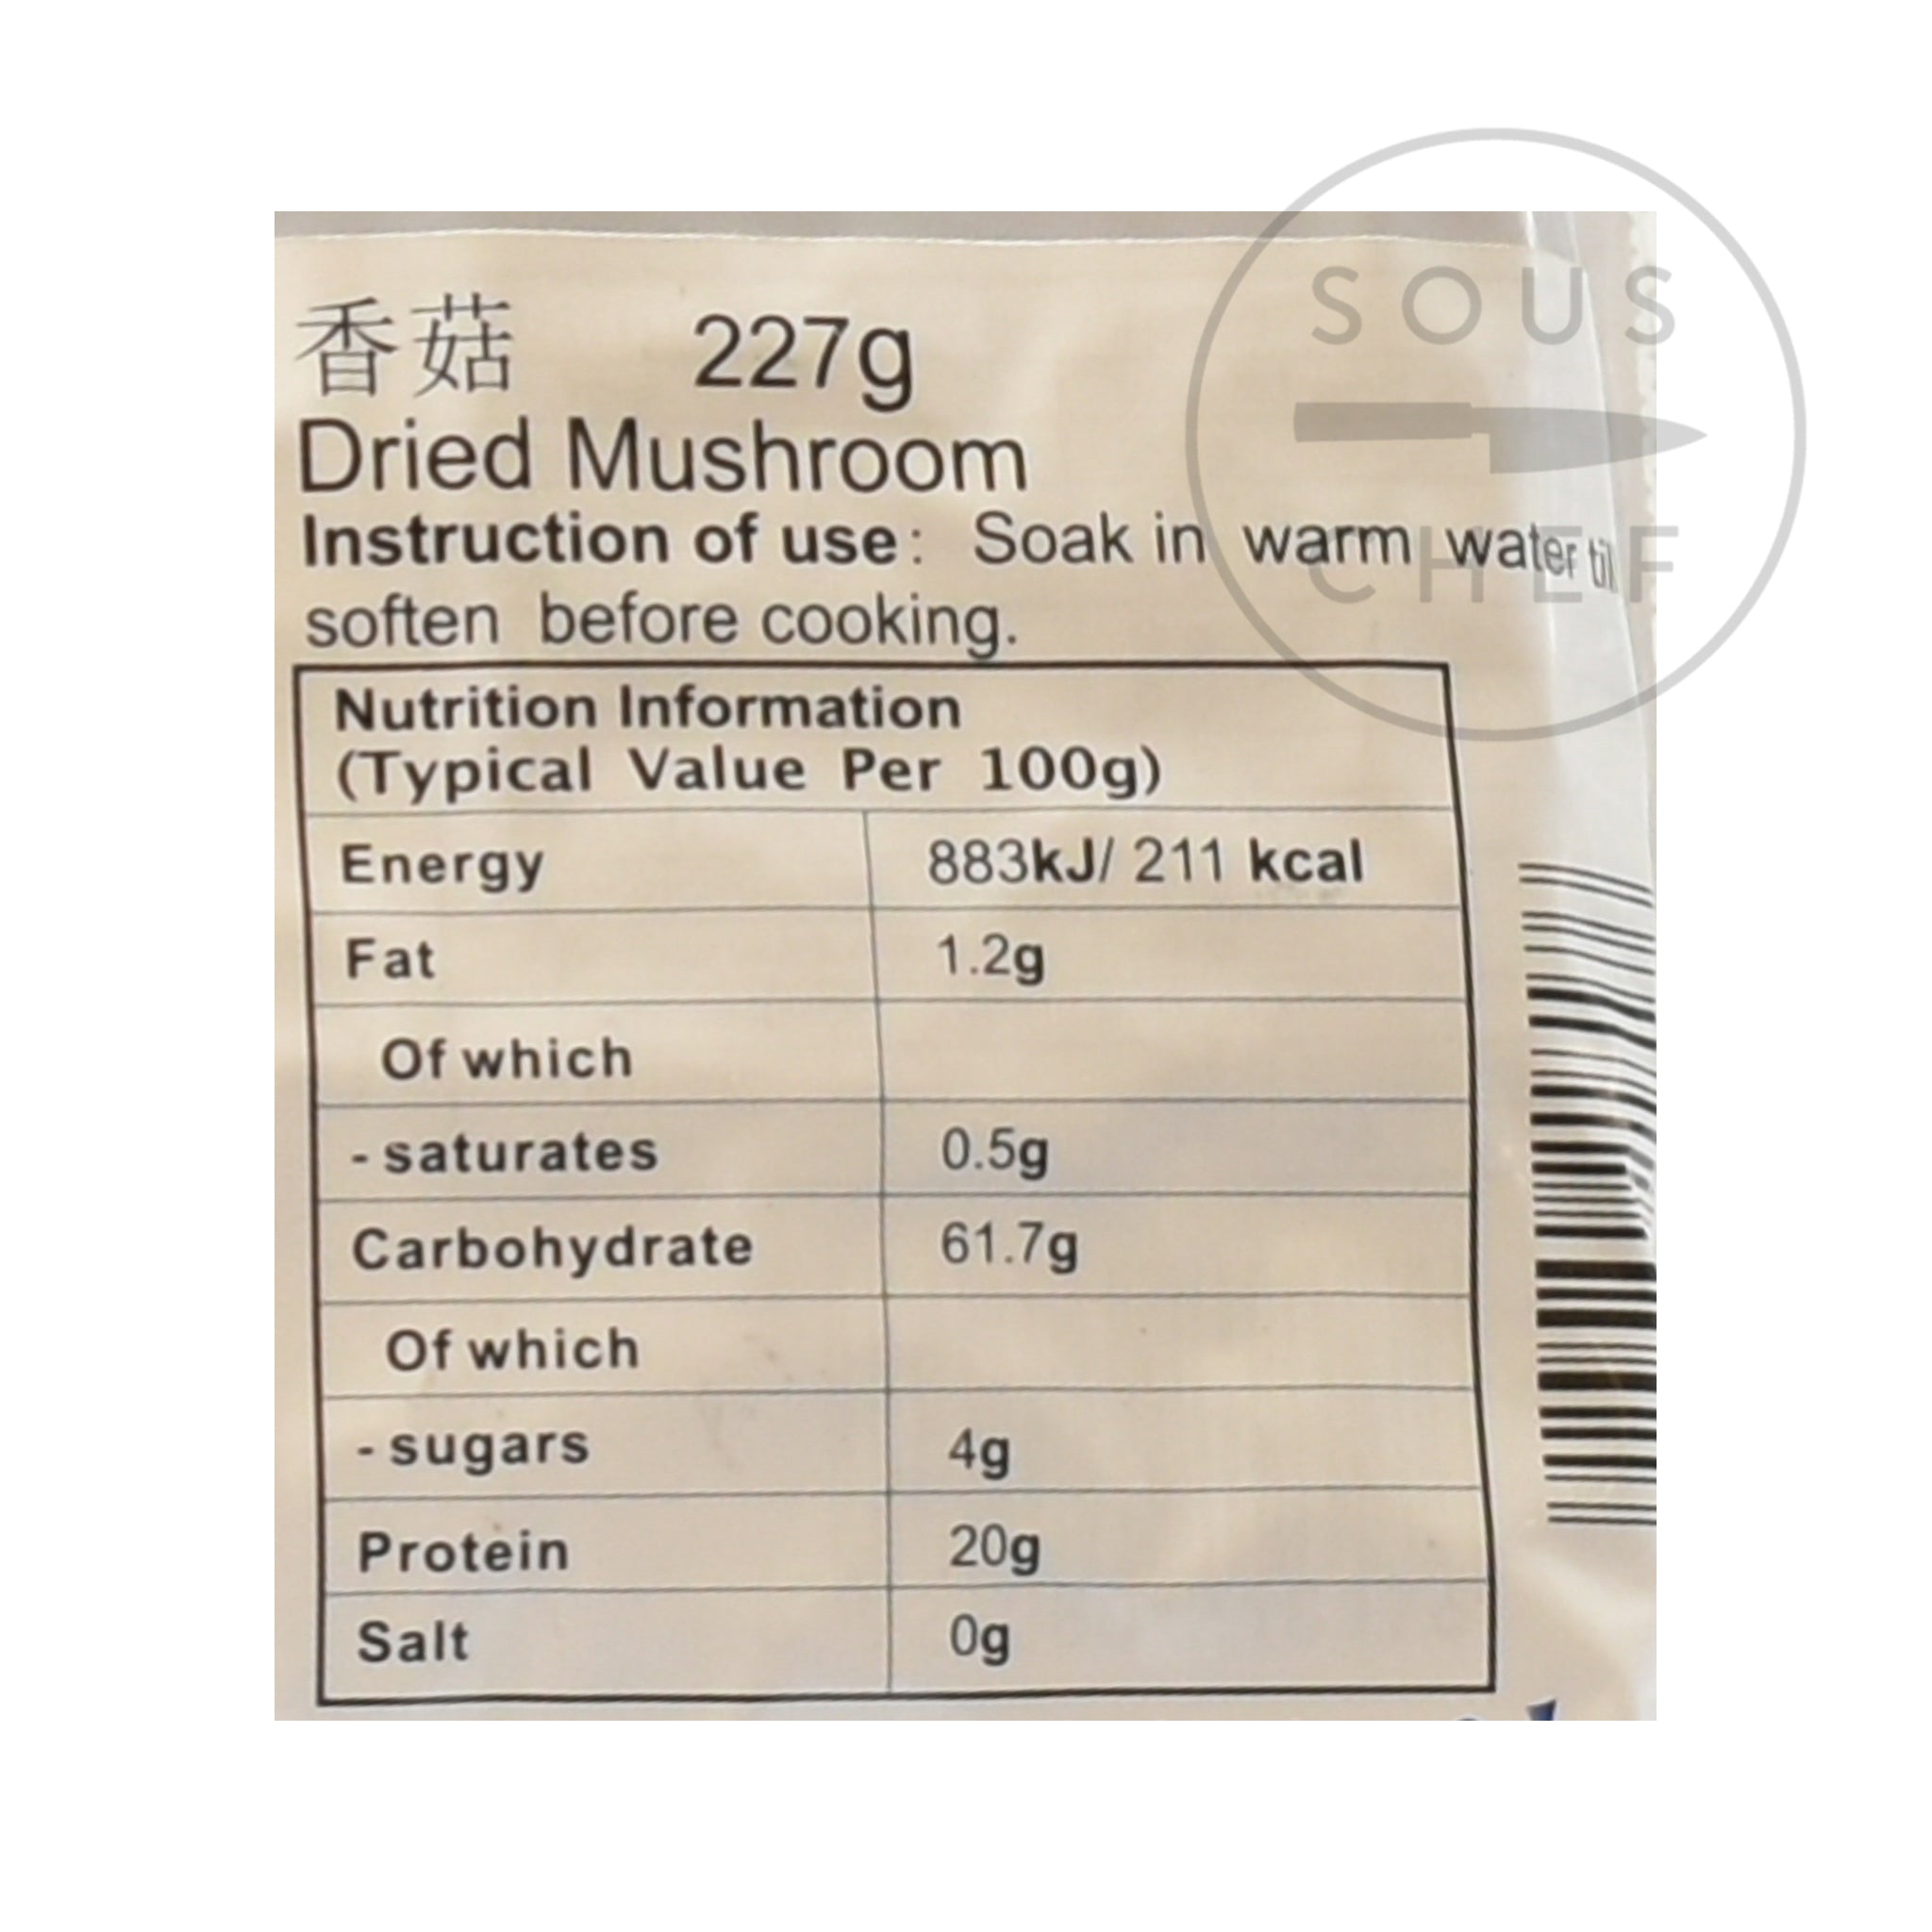 Dried Shiitake Mushroom 227g nutritional information ingredients